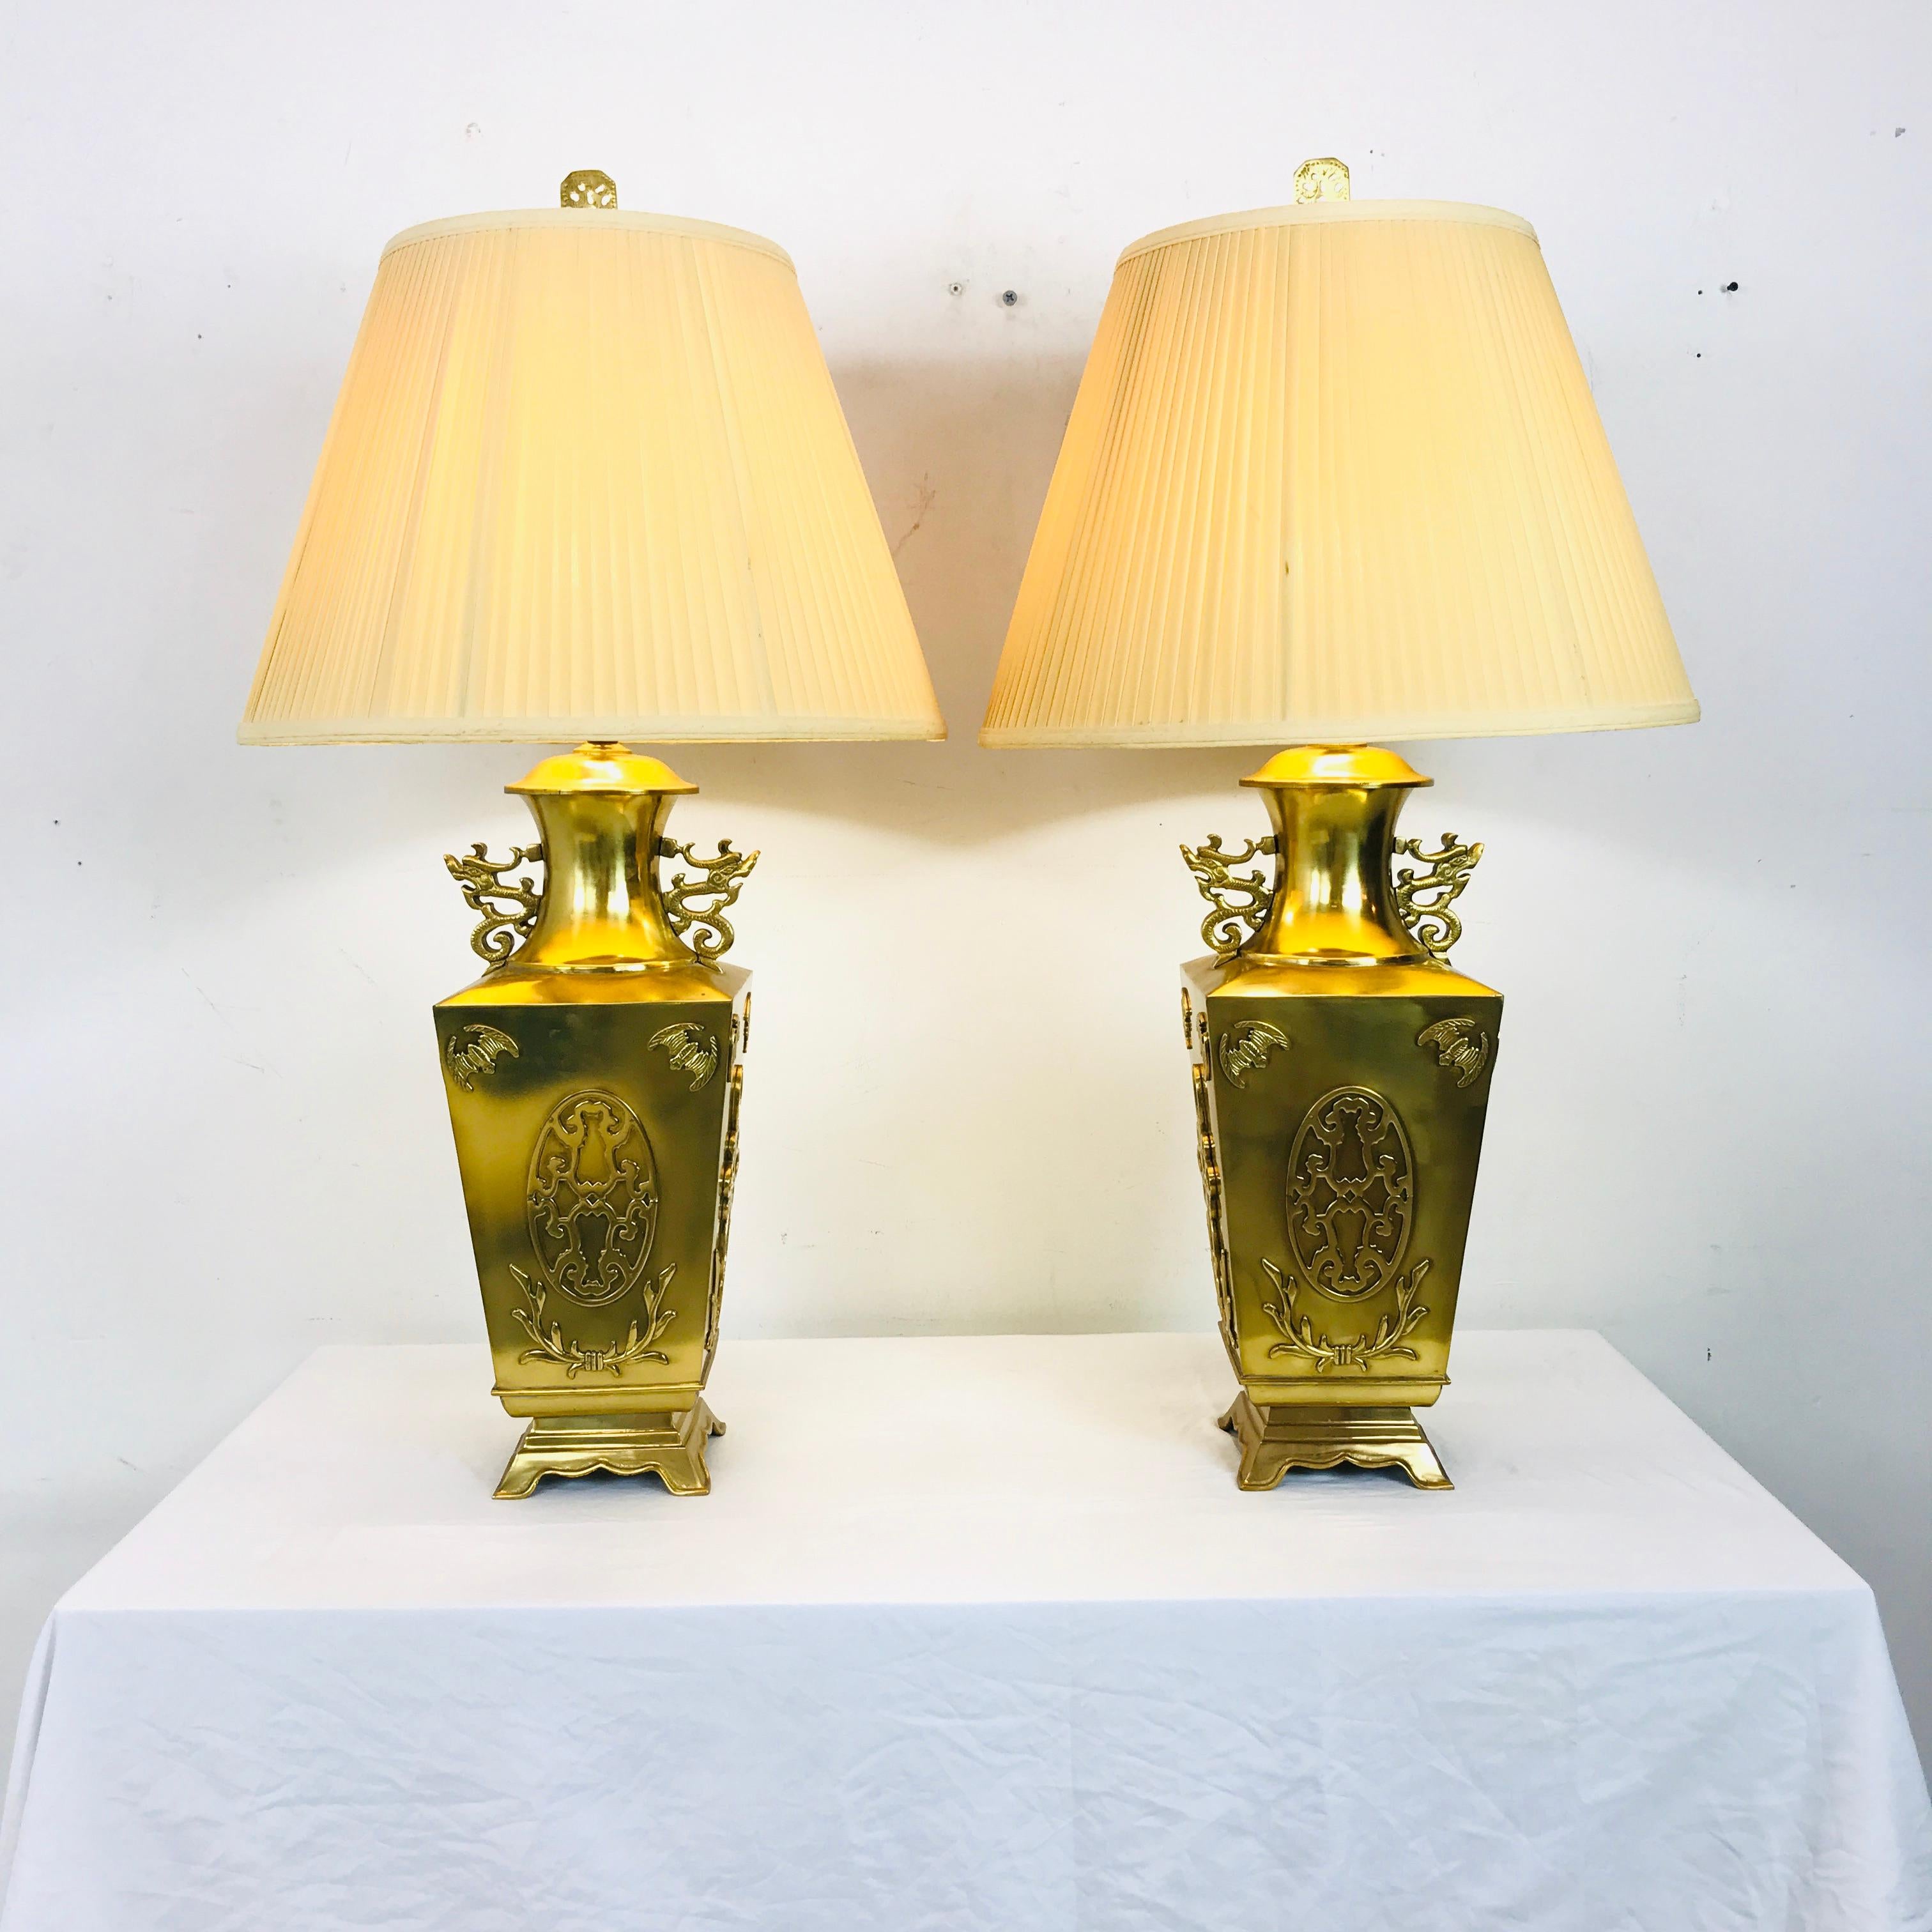 Pair of unique brass Asian lamps with bat detail. Measures 39